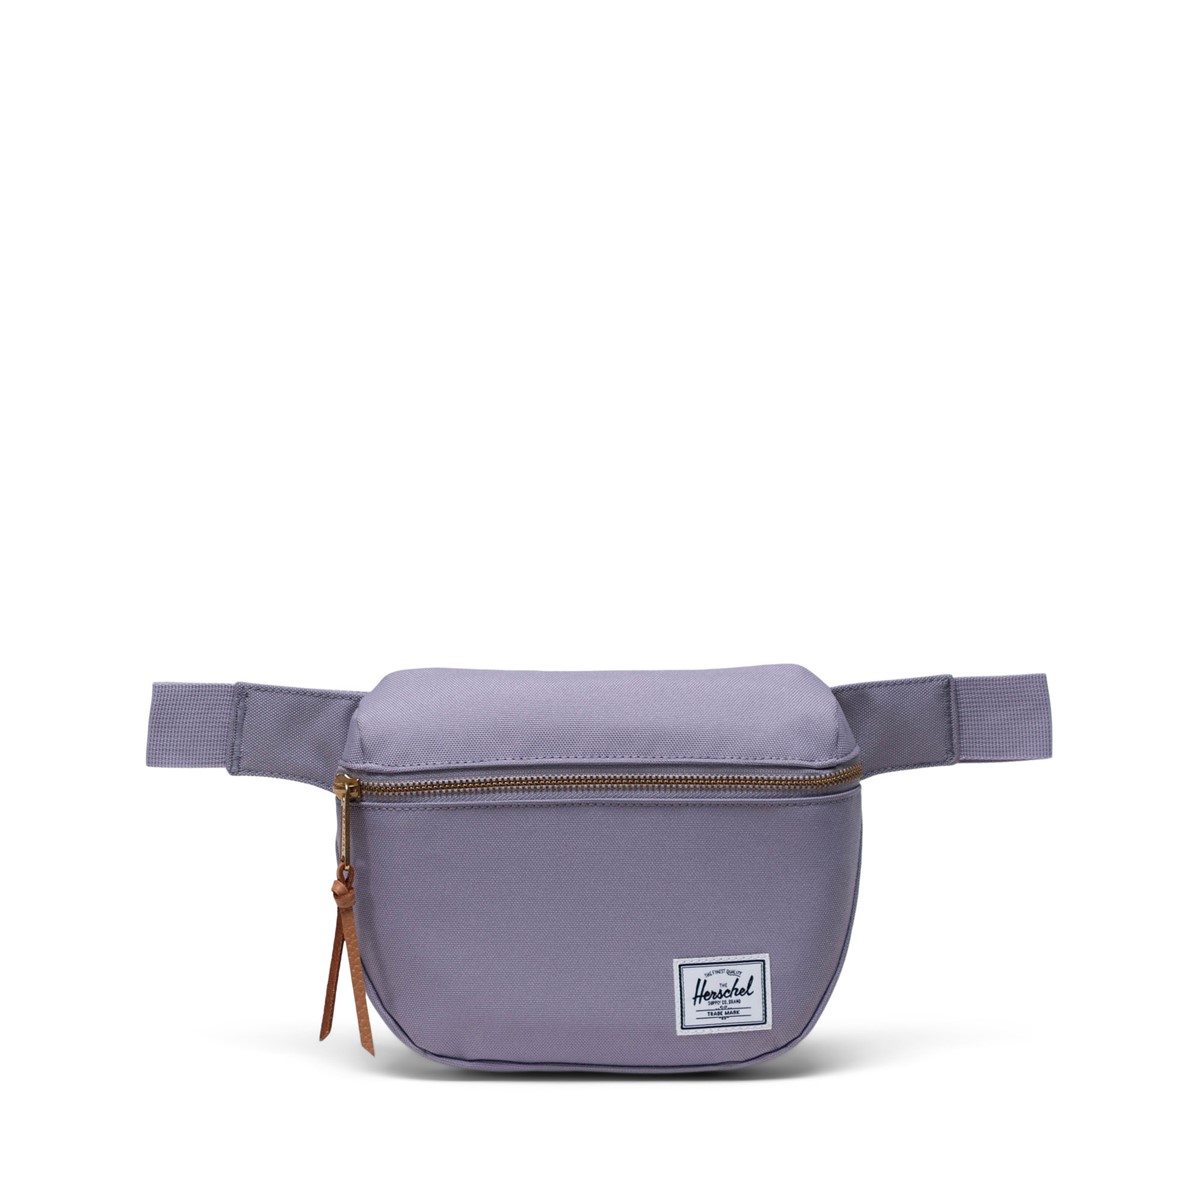 Fifteen Hip Bag in Lavender